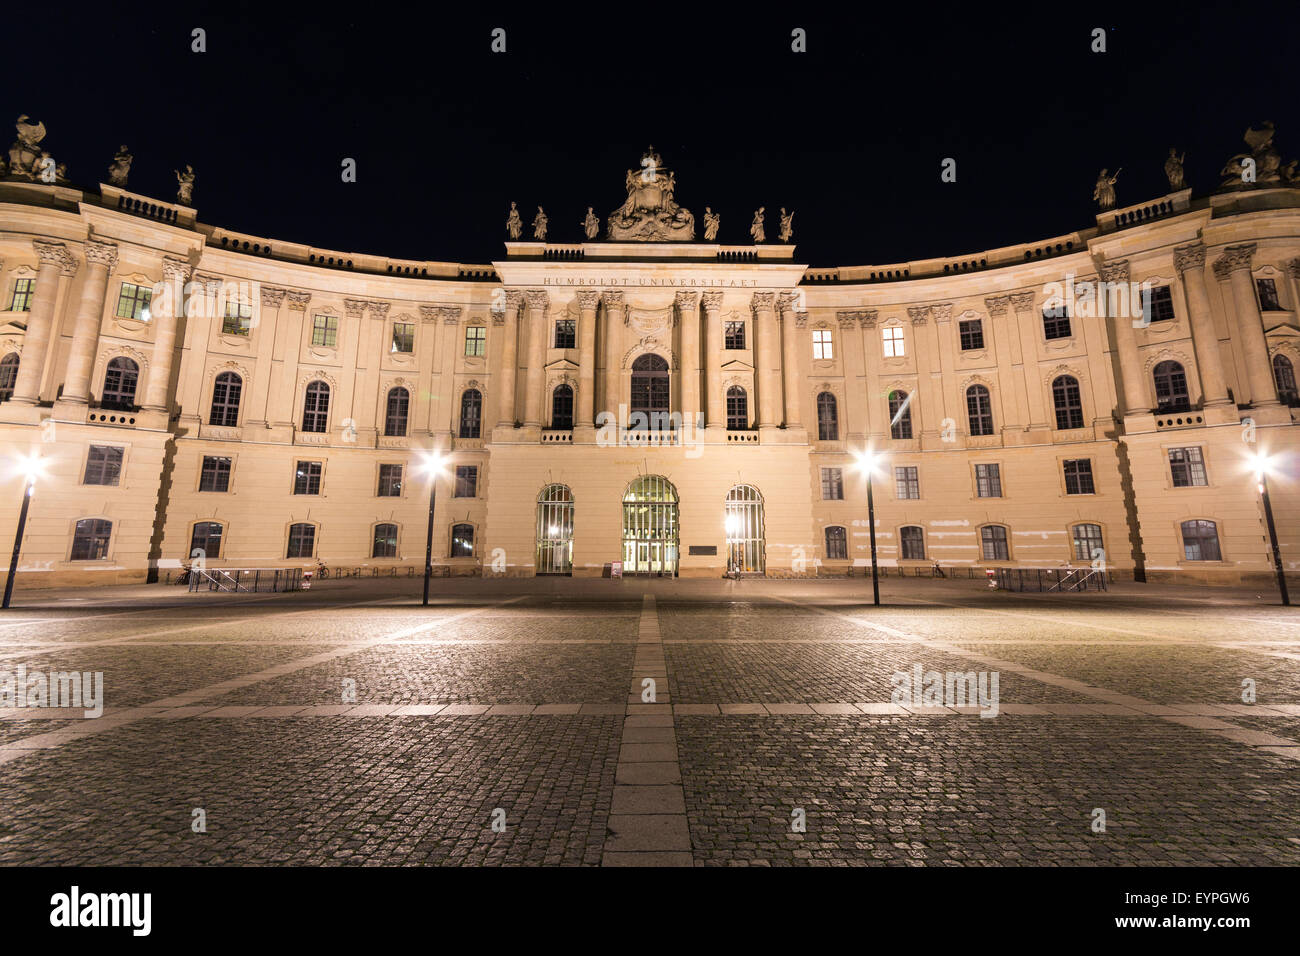 Humboldt university at night, berlin, germany Stock Photo